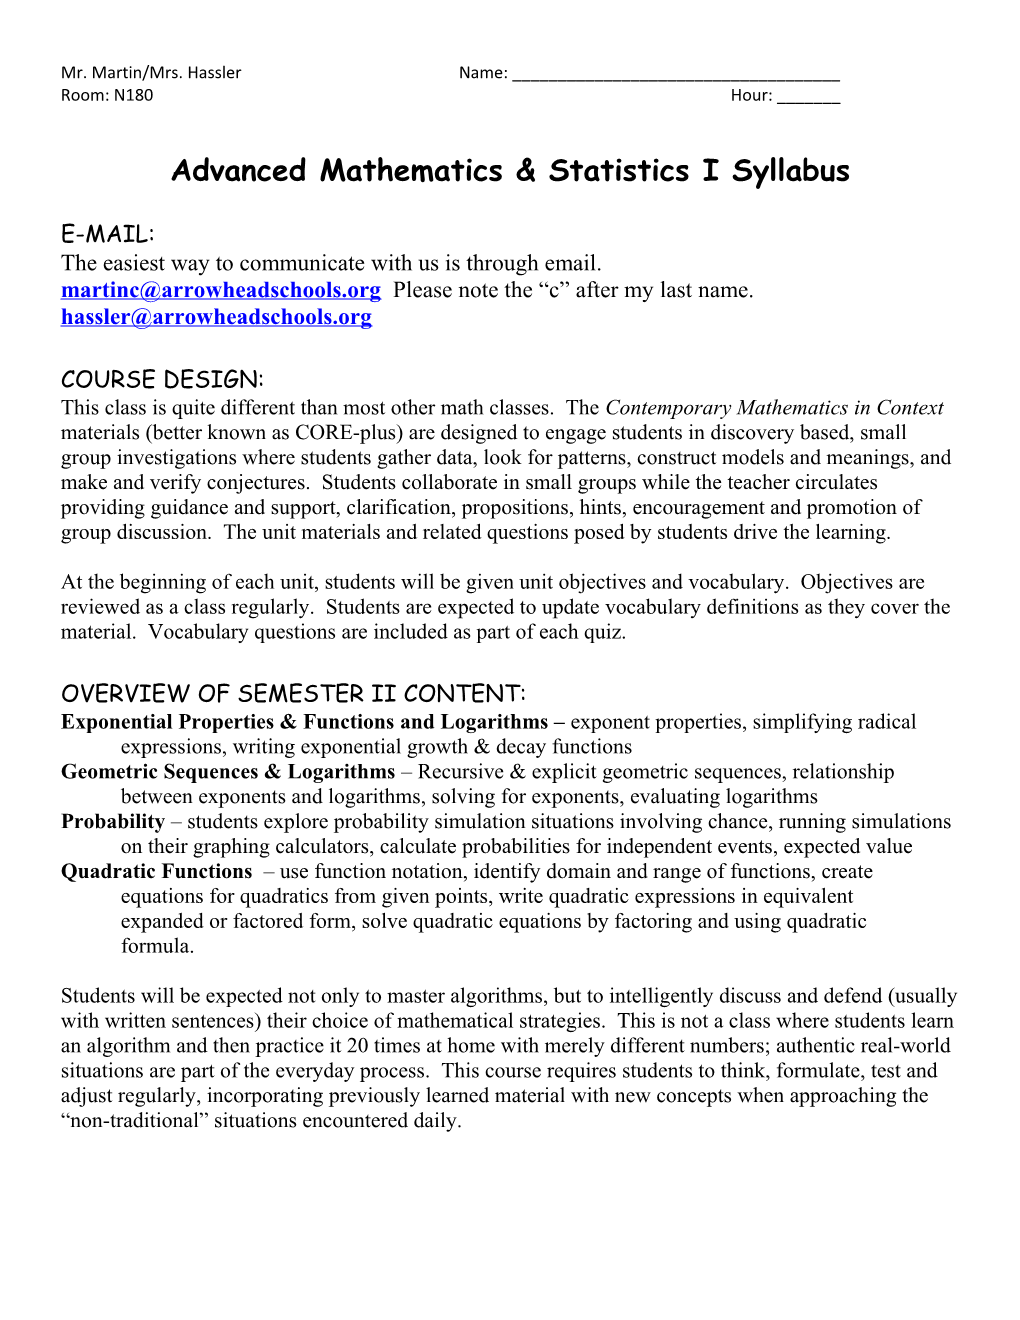 Advanced Mathematics & Statistics I Syllabus